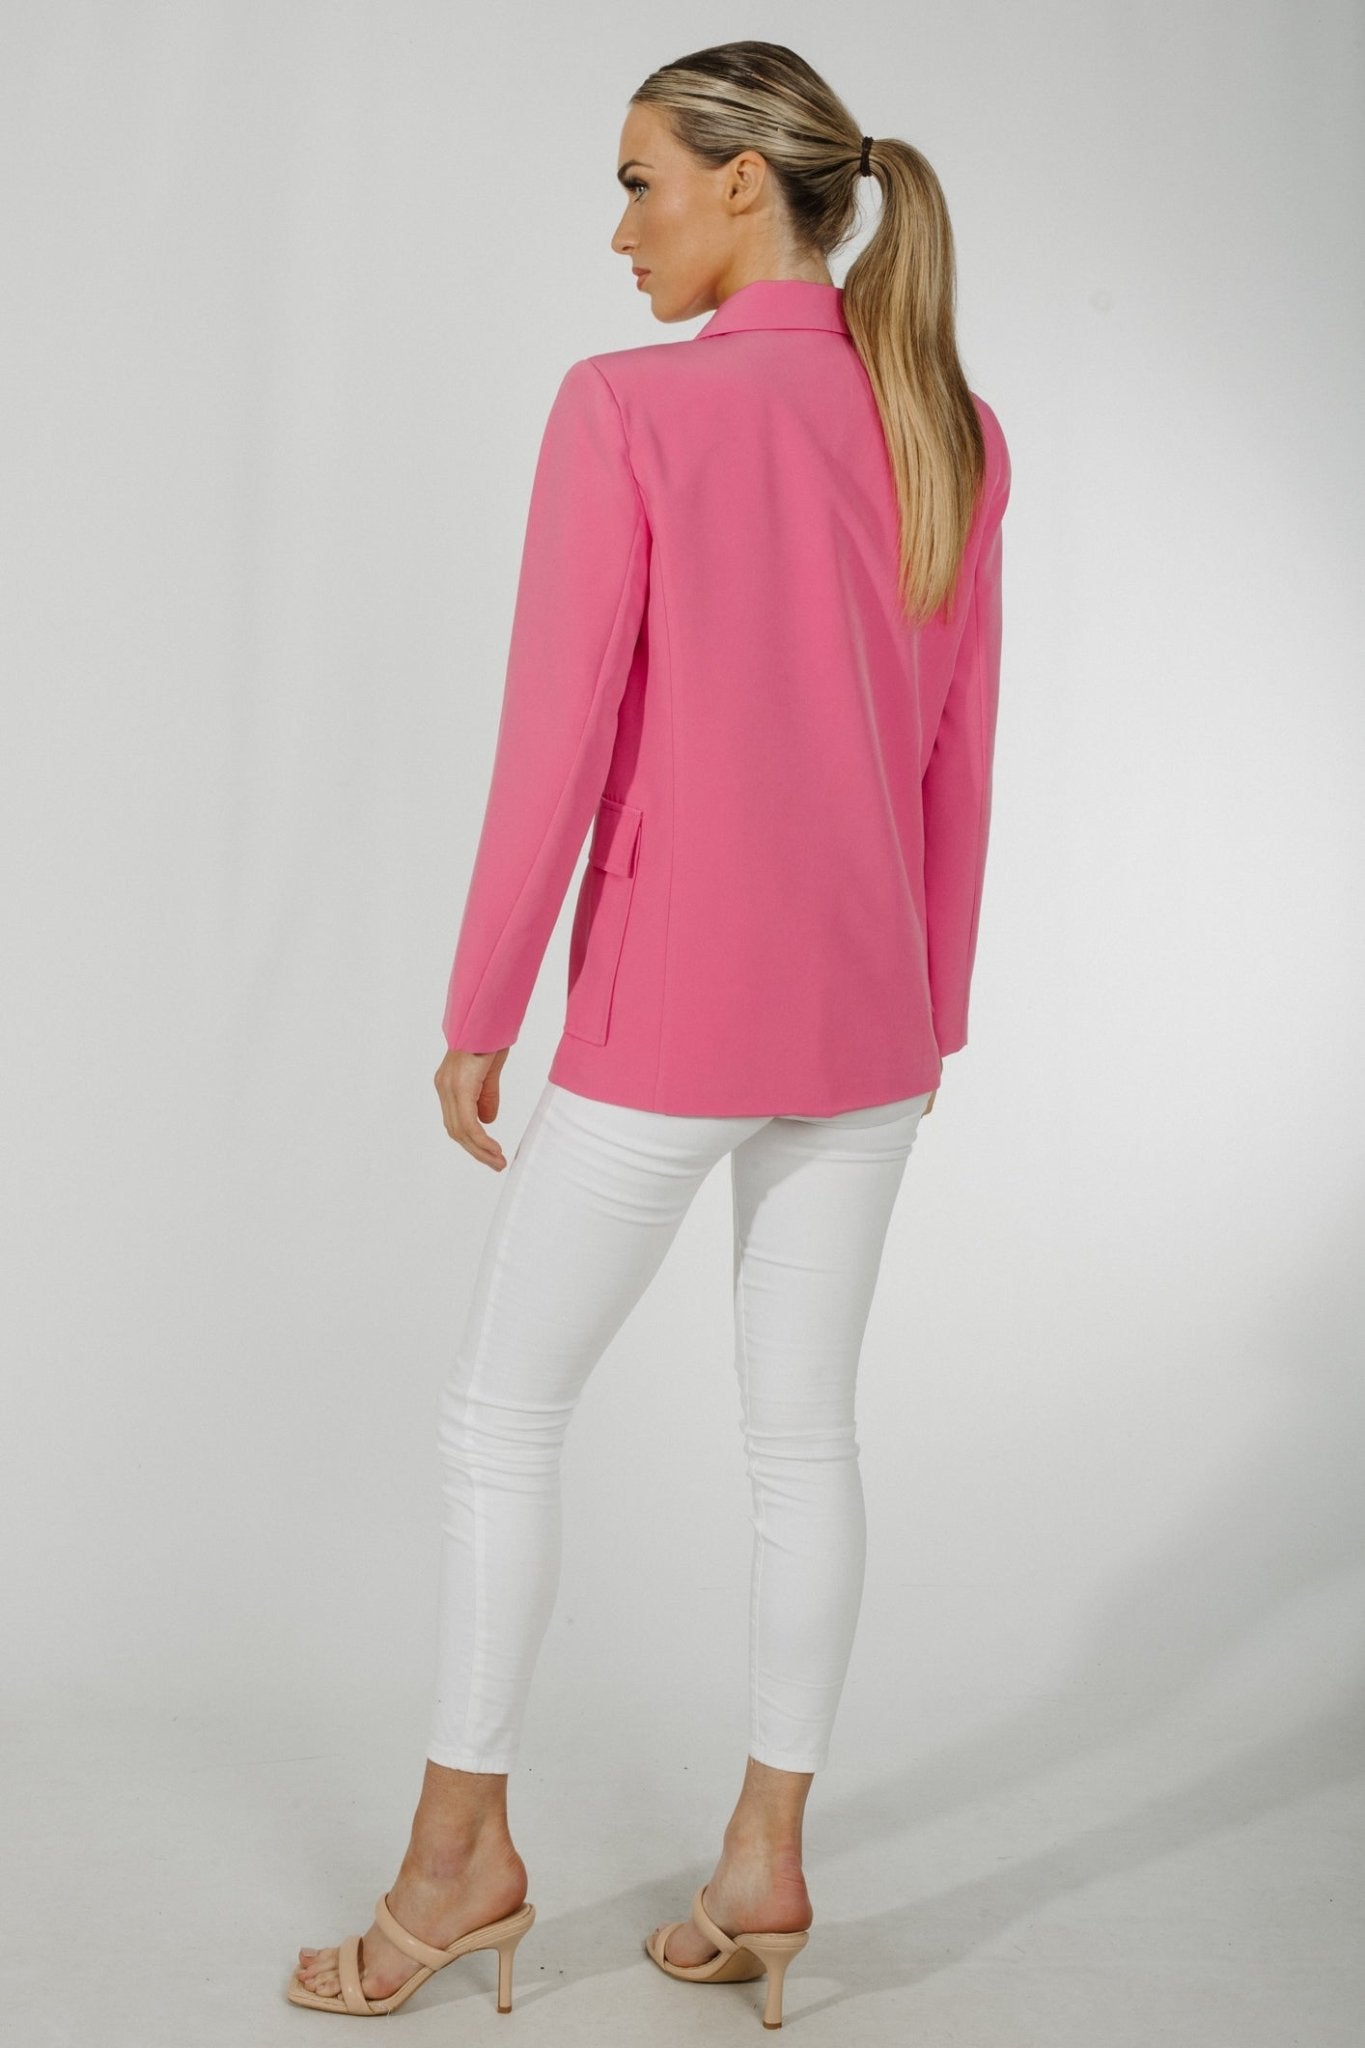 Lexi Blazer In Pink - The Walk in Wardrobe